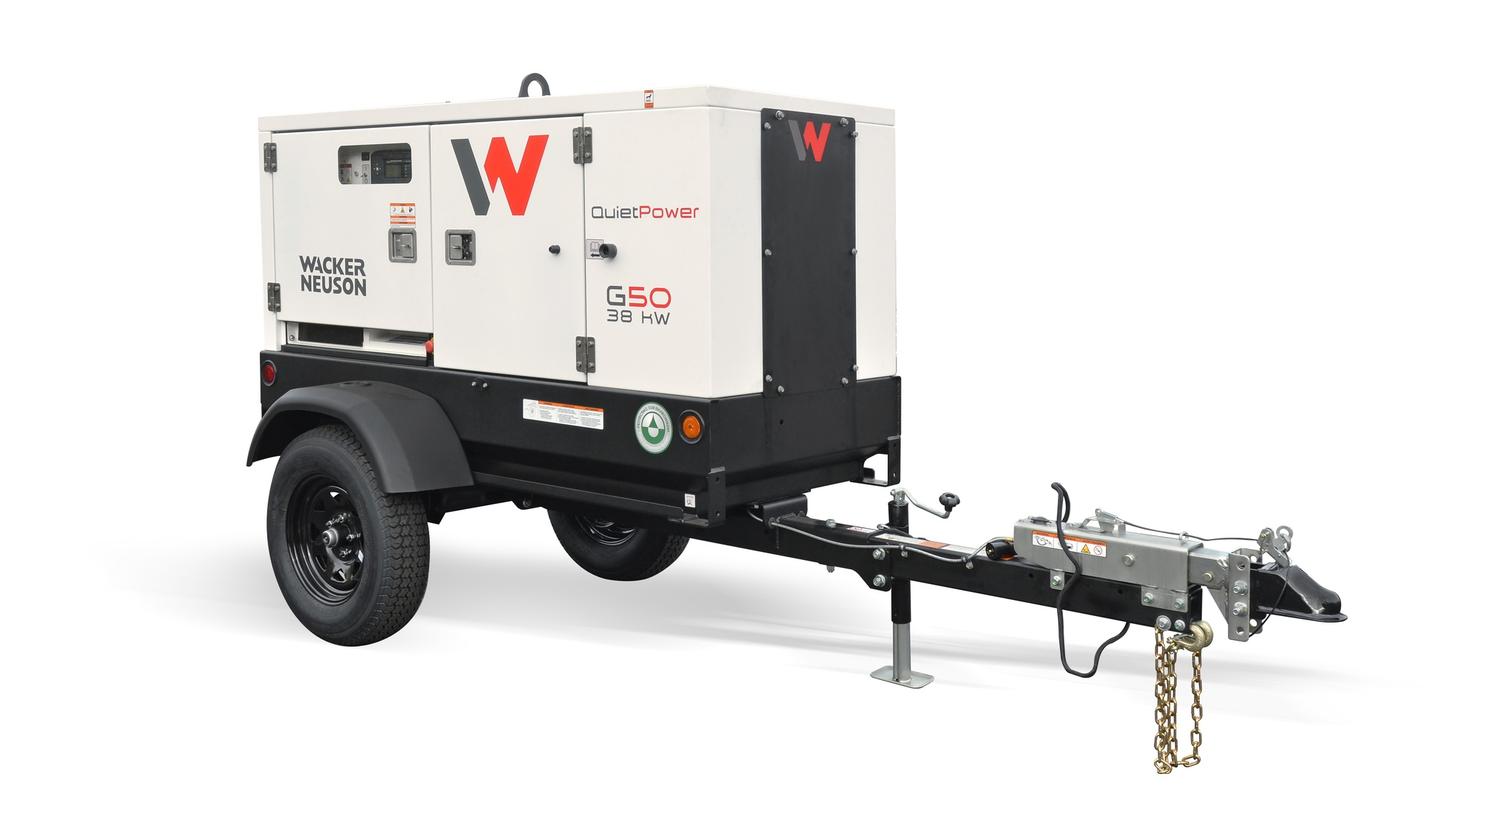  Wacker Neuson Mobile generators G50